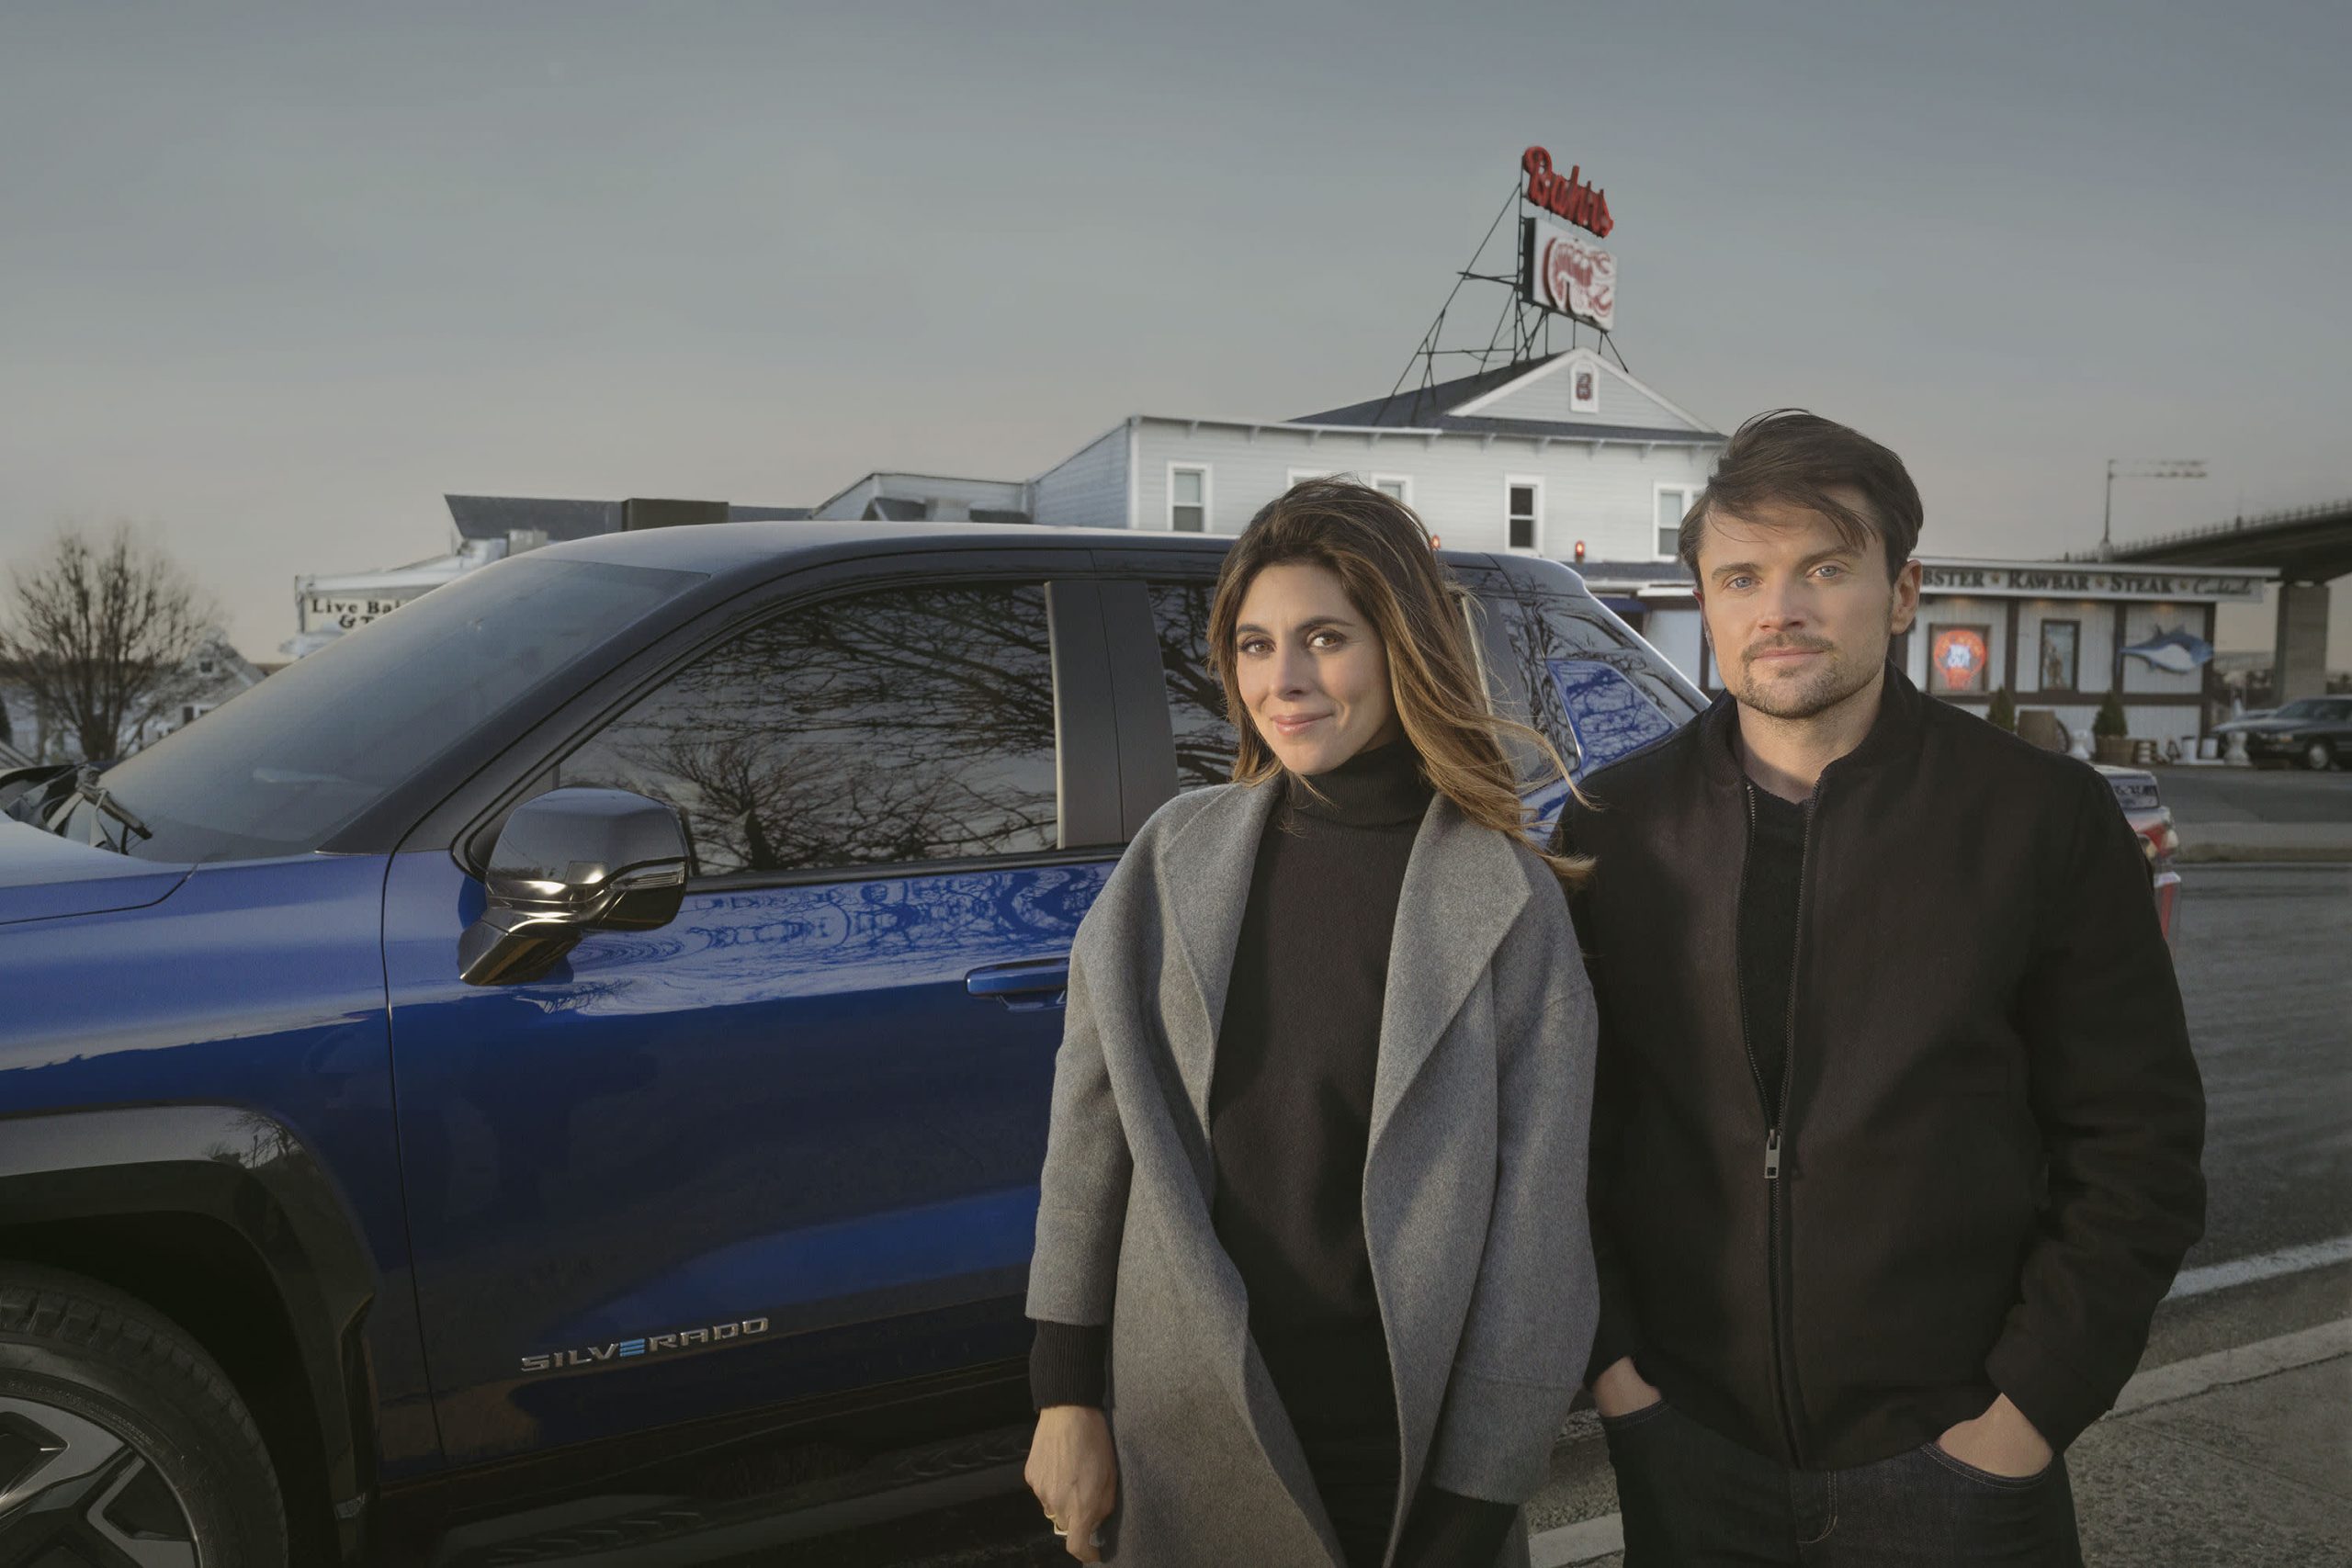 Chevrolet reboots, updates ‘The Sopranos’ intro for Super Bowl ad